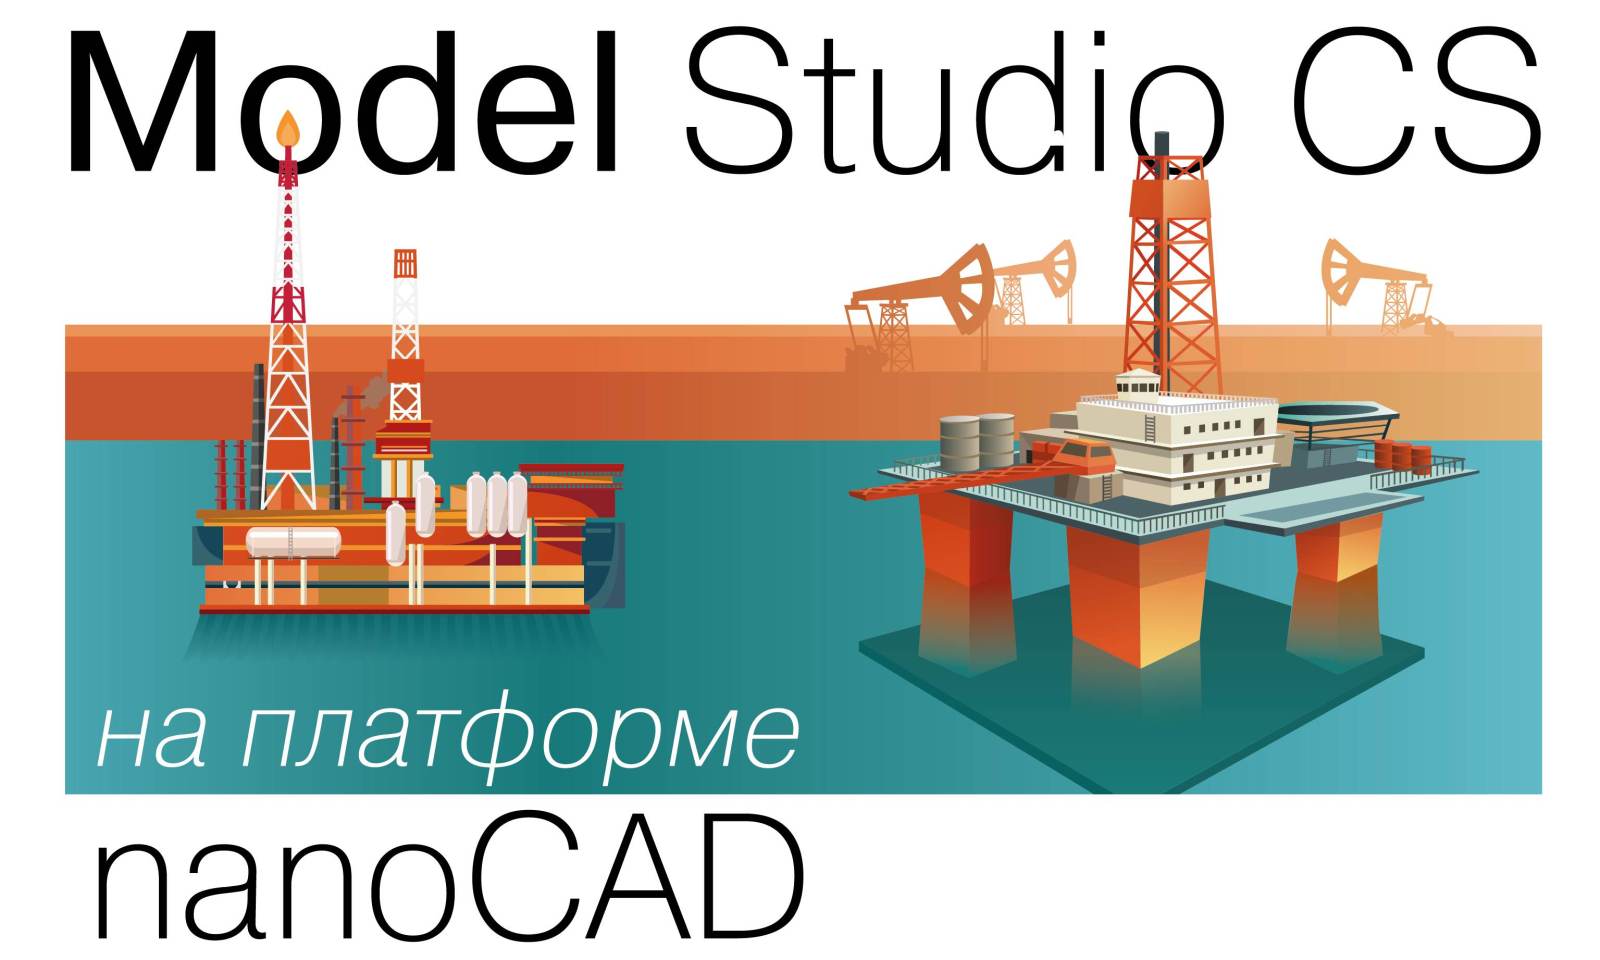 Model Studio CS 